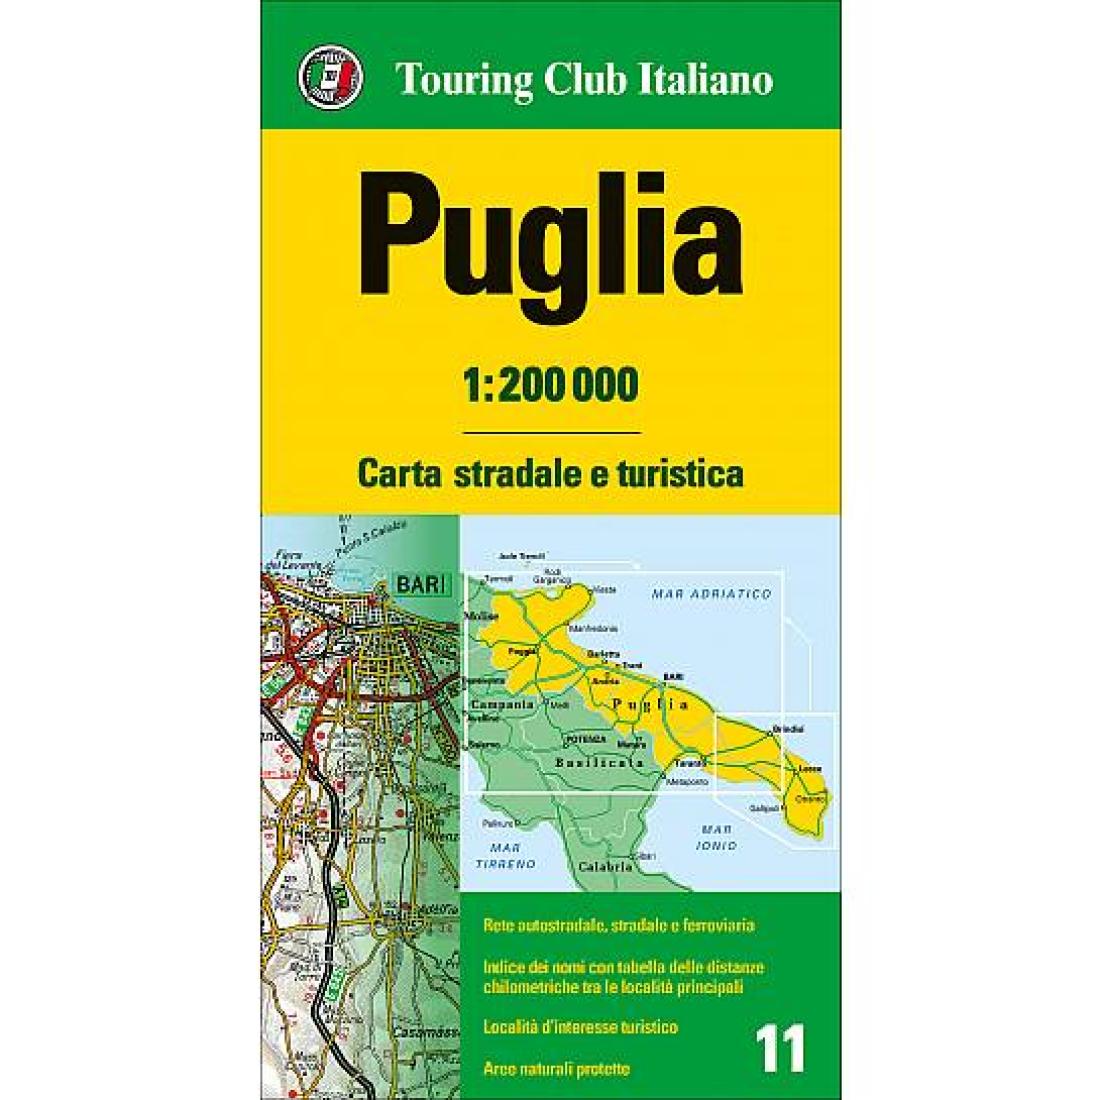 Puglia = Apulia = Apulien = Pouilles